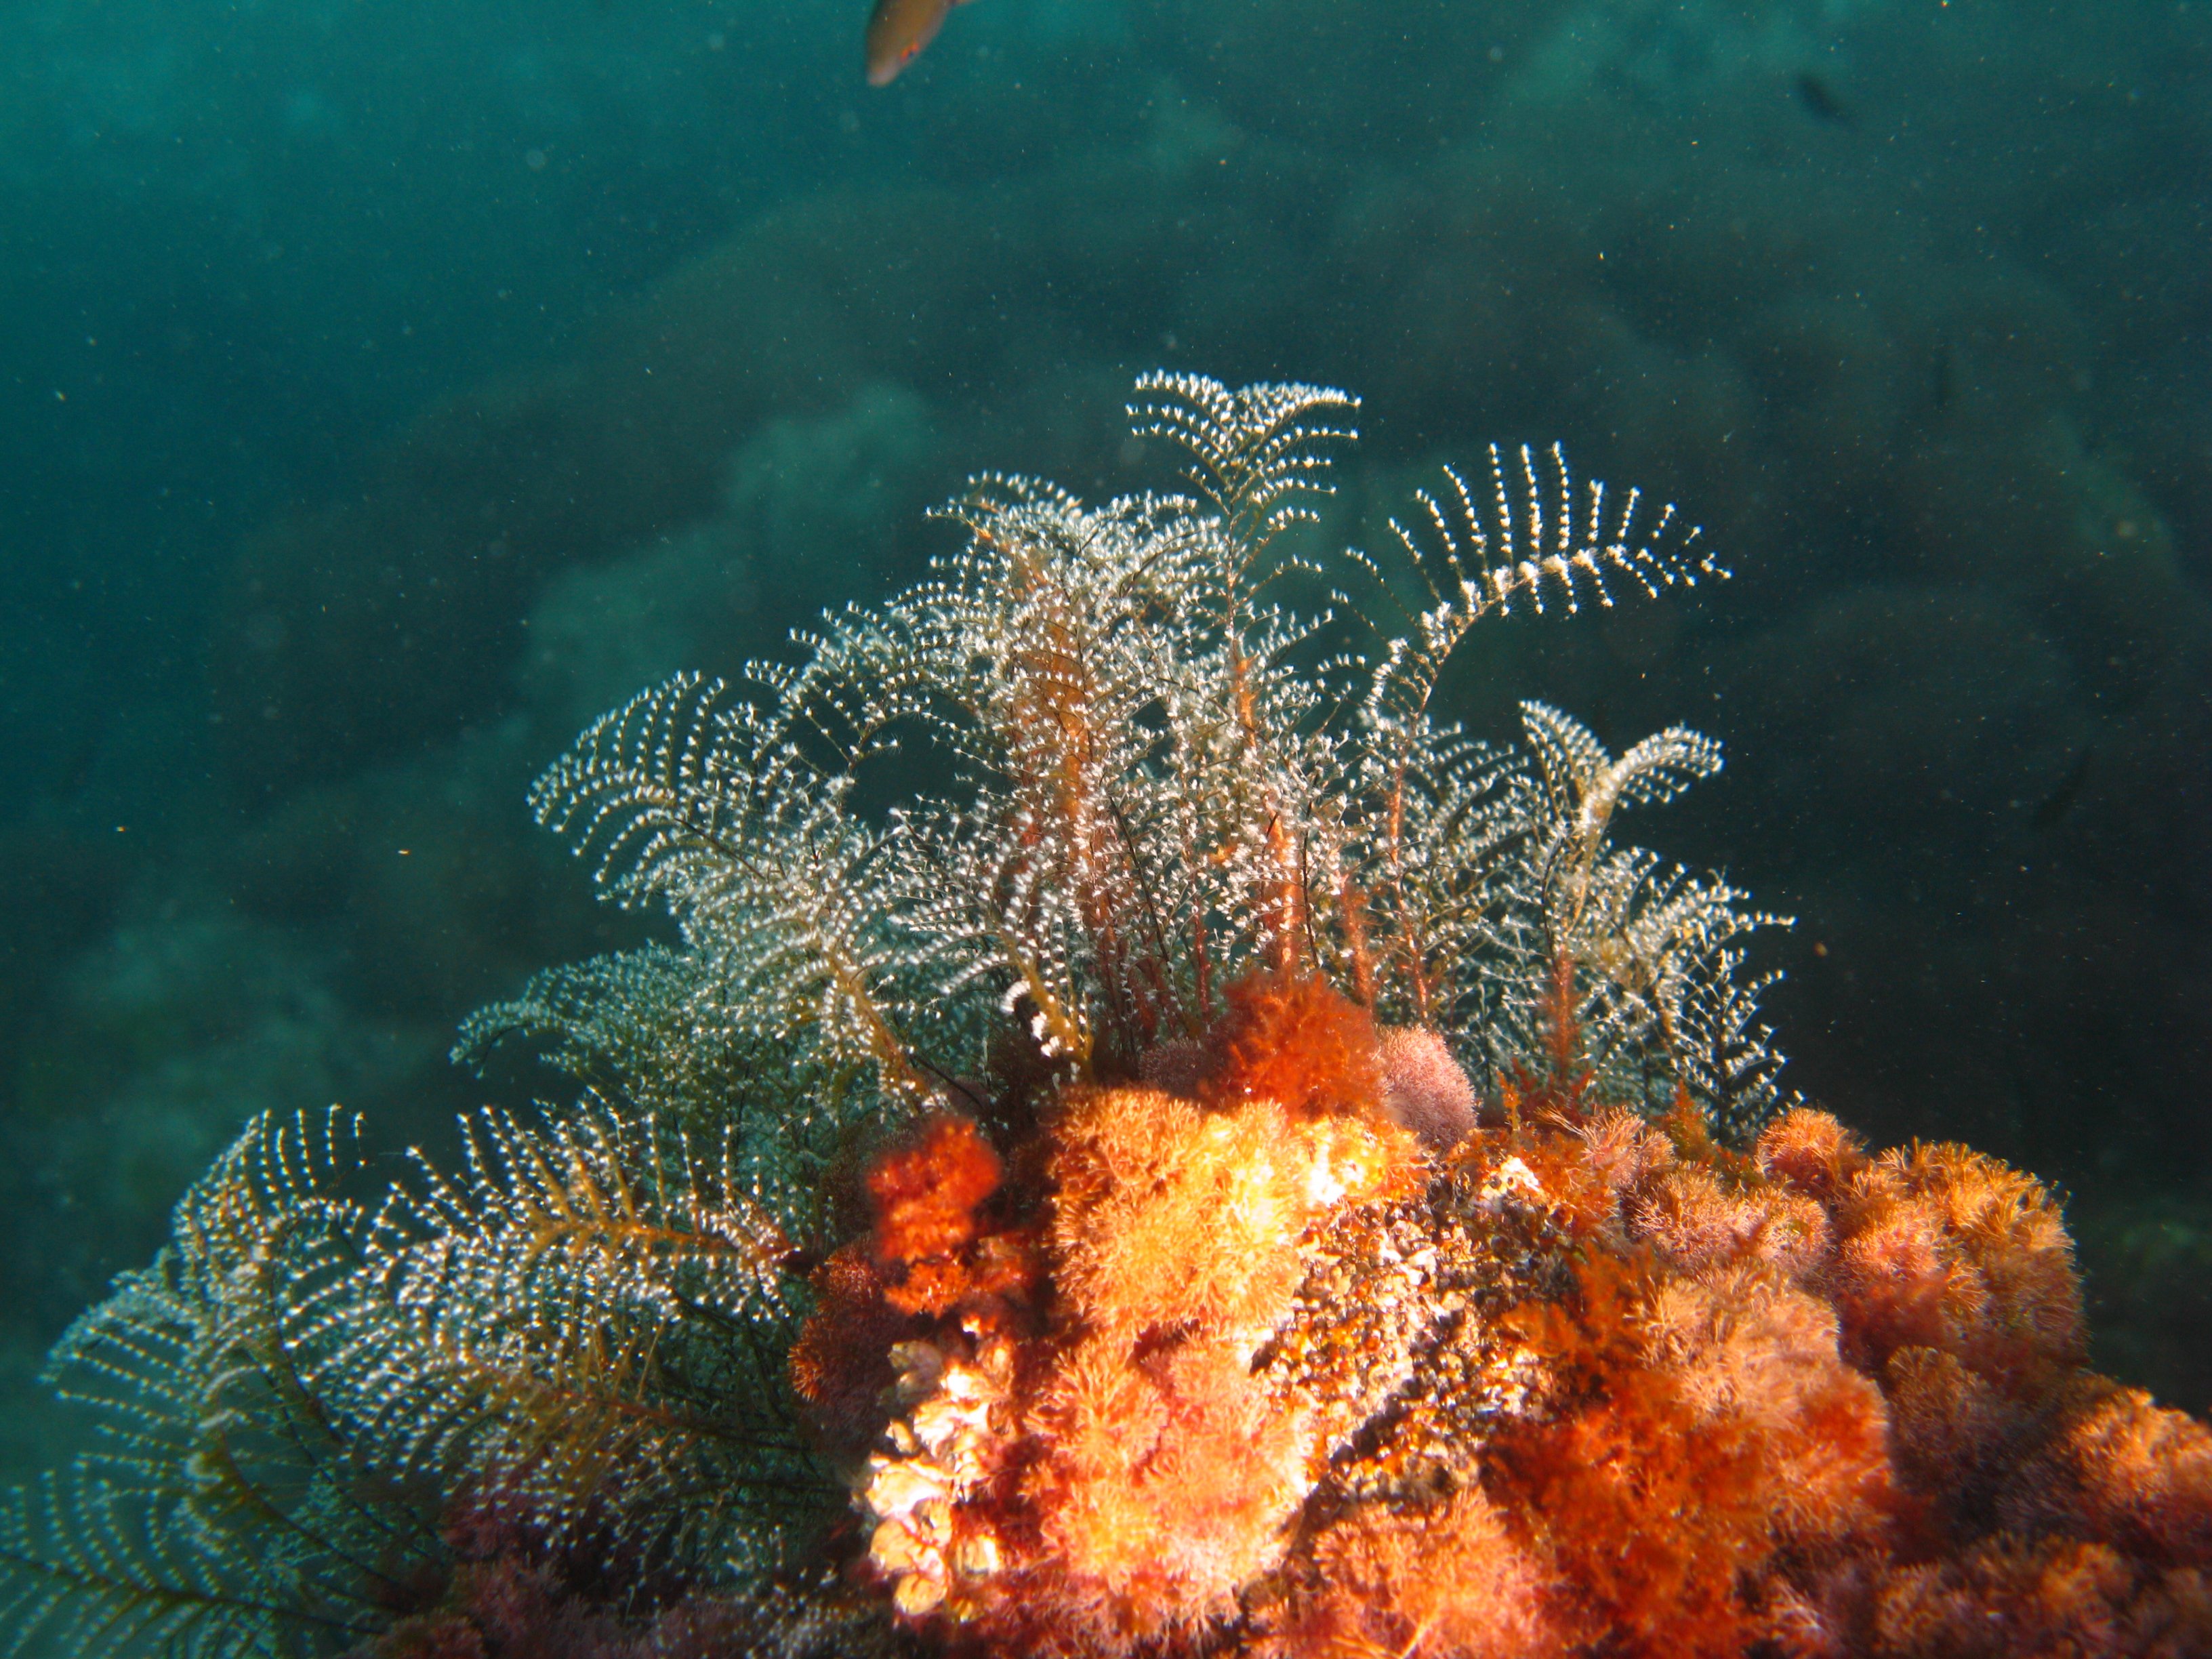 plemmirio, riserva naturale sottomarina, siracusa, sicilia, alghe rosse